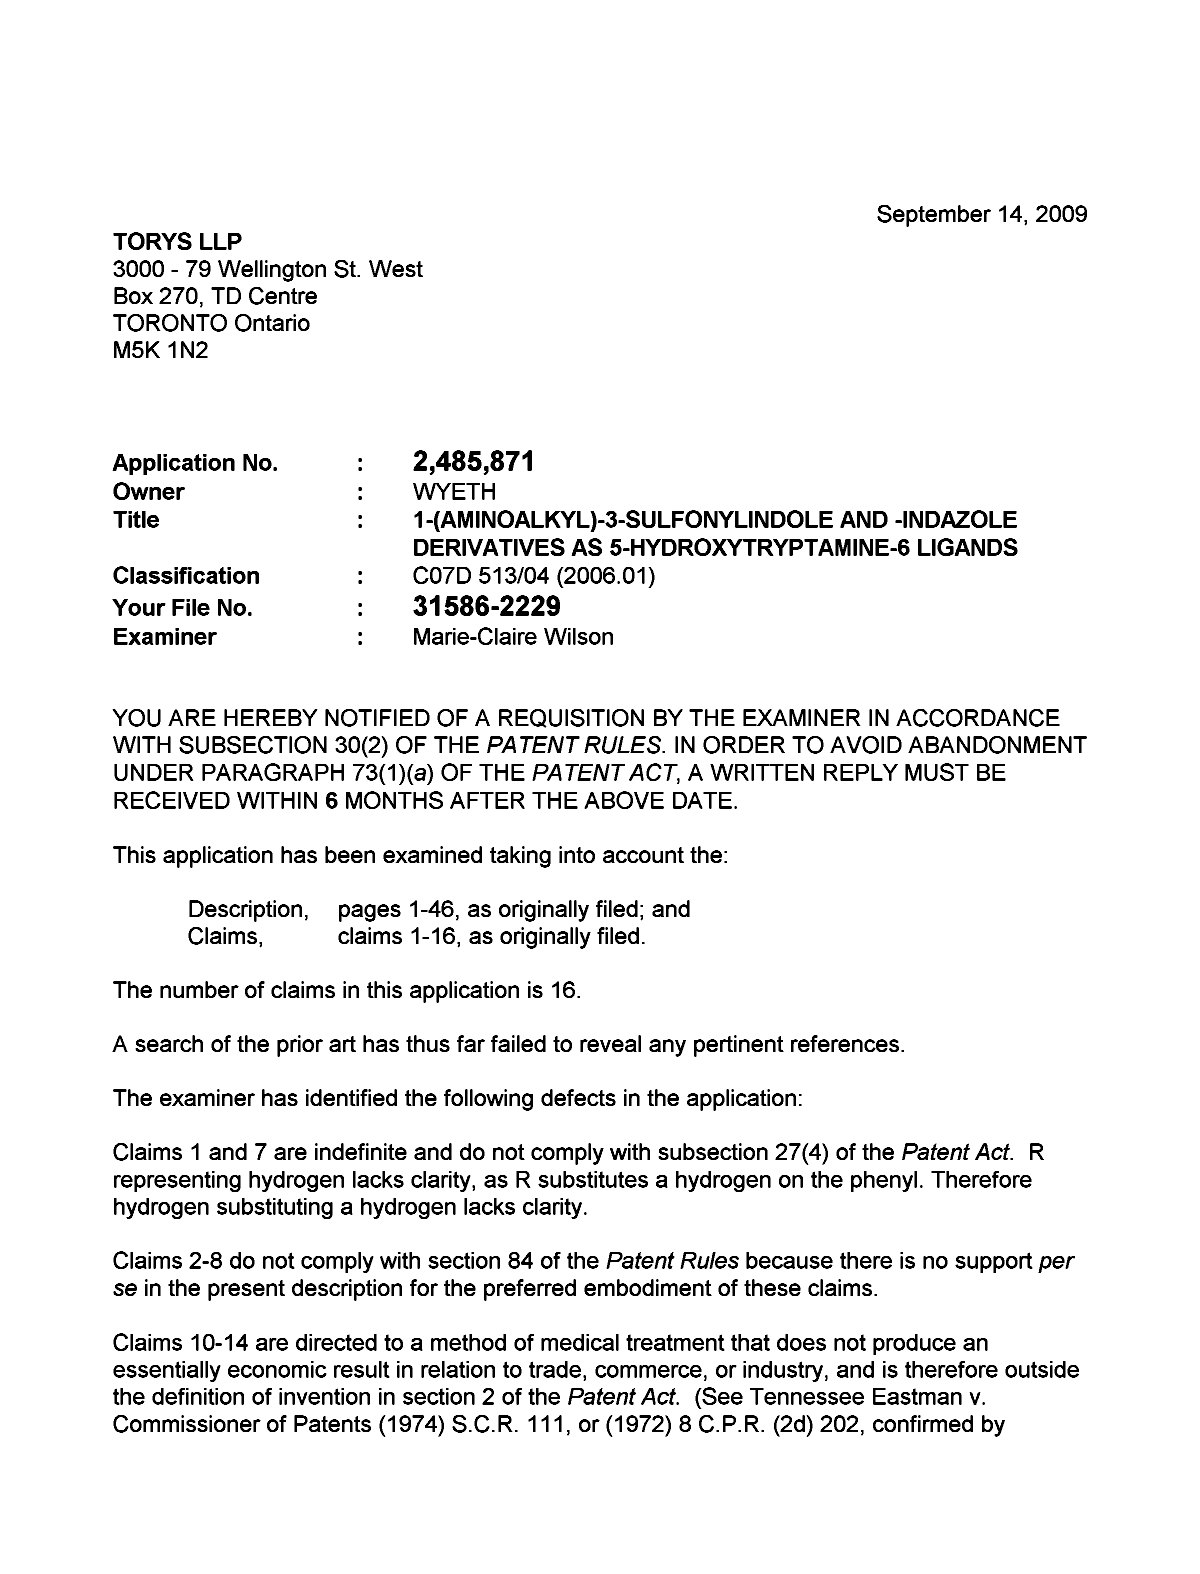 Canadian Patent Document 2485871. Prosecution-Amendment 20090914. Image 1 of 2